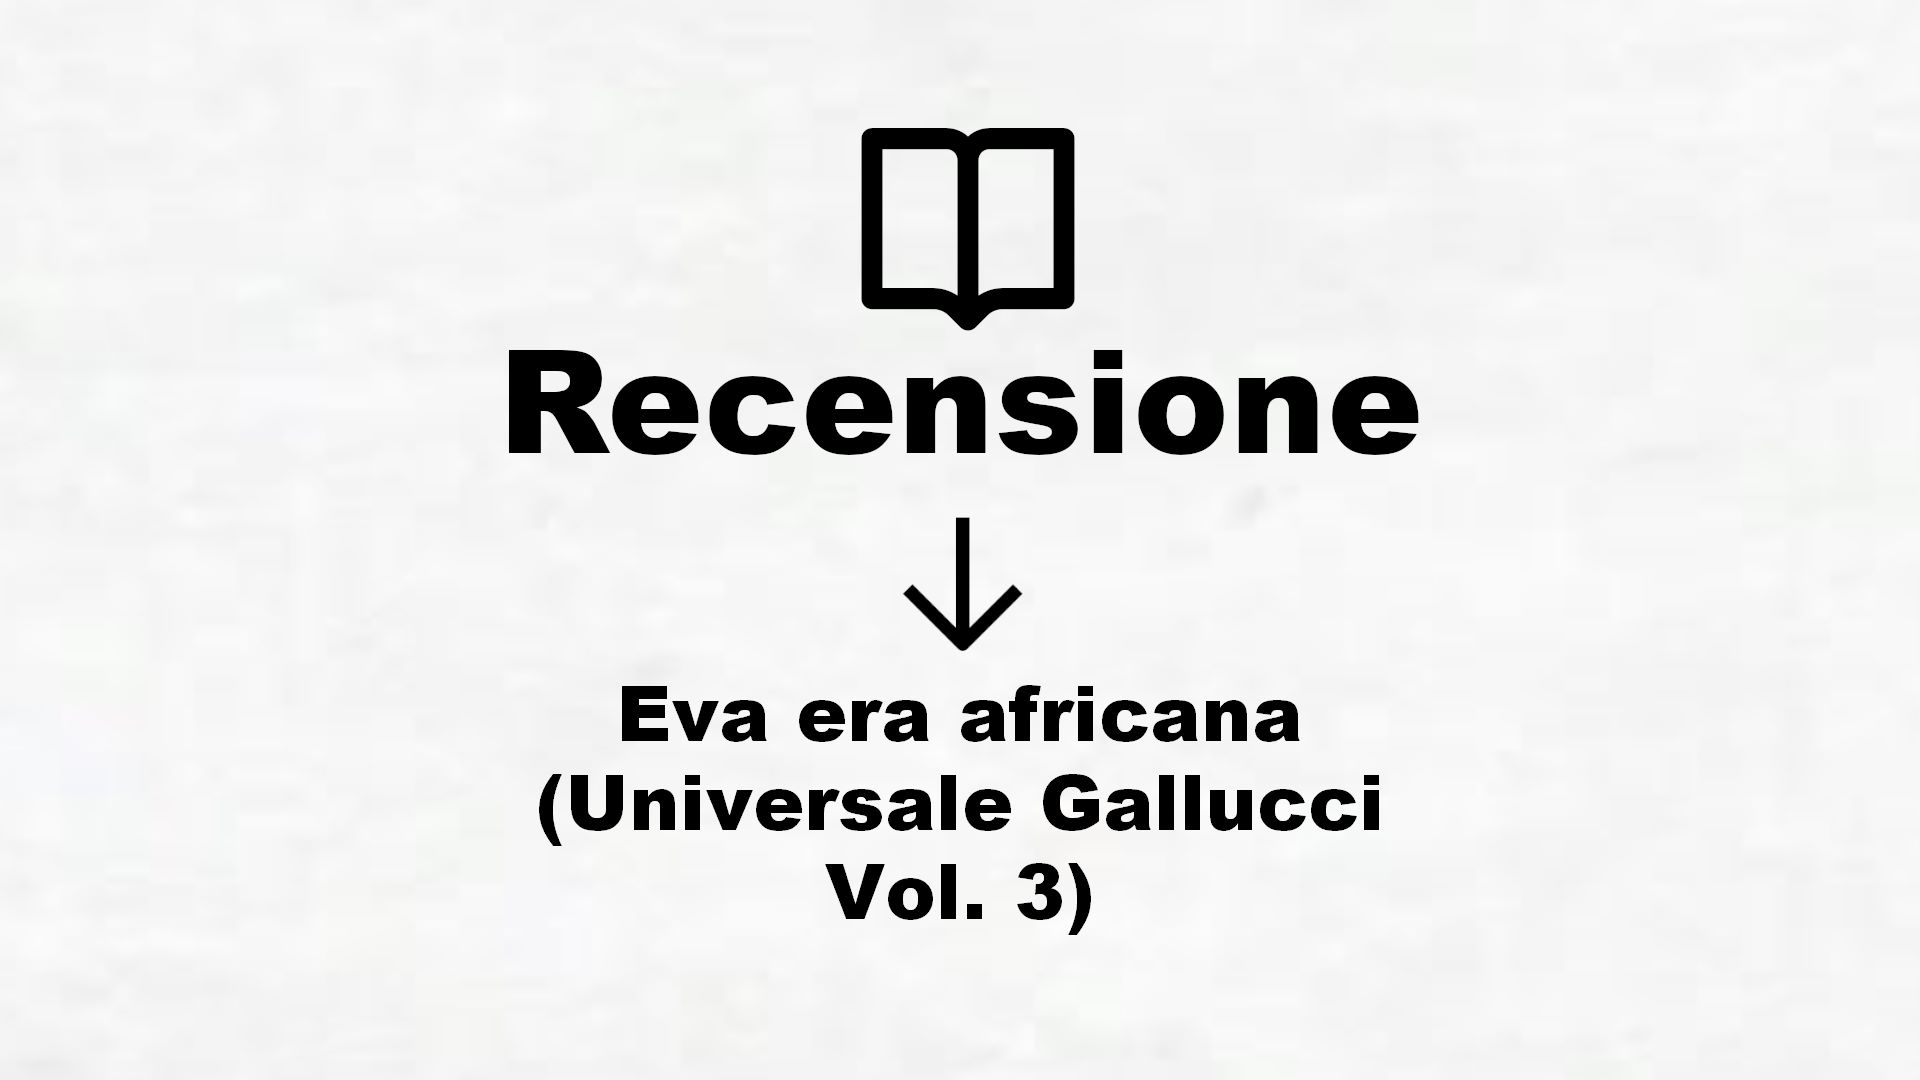 Eva era africana (Universale Gallucci Vol. 3) – Recensione Libro